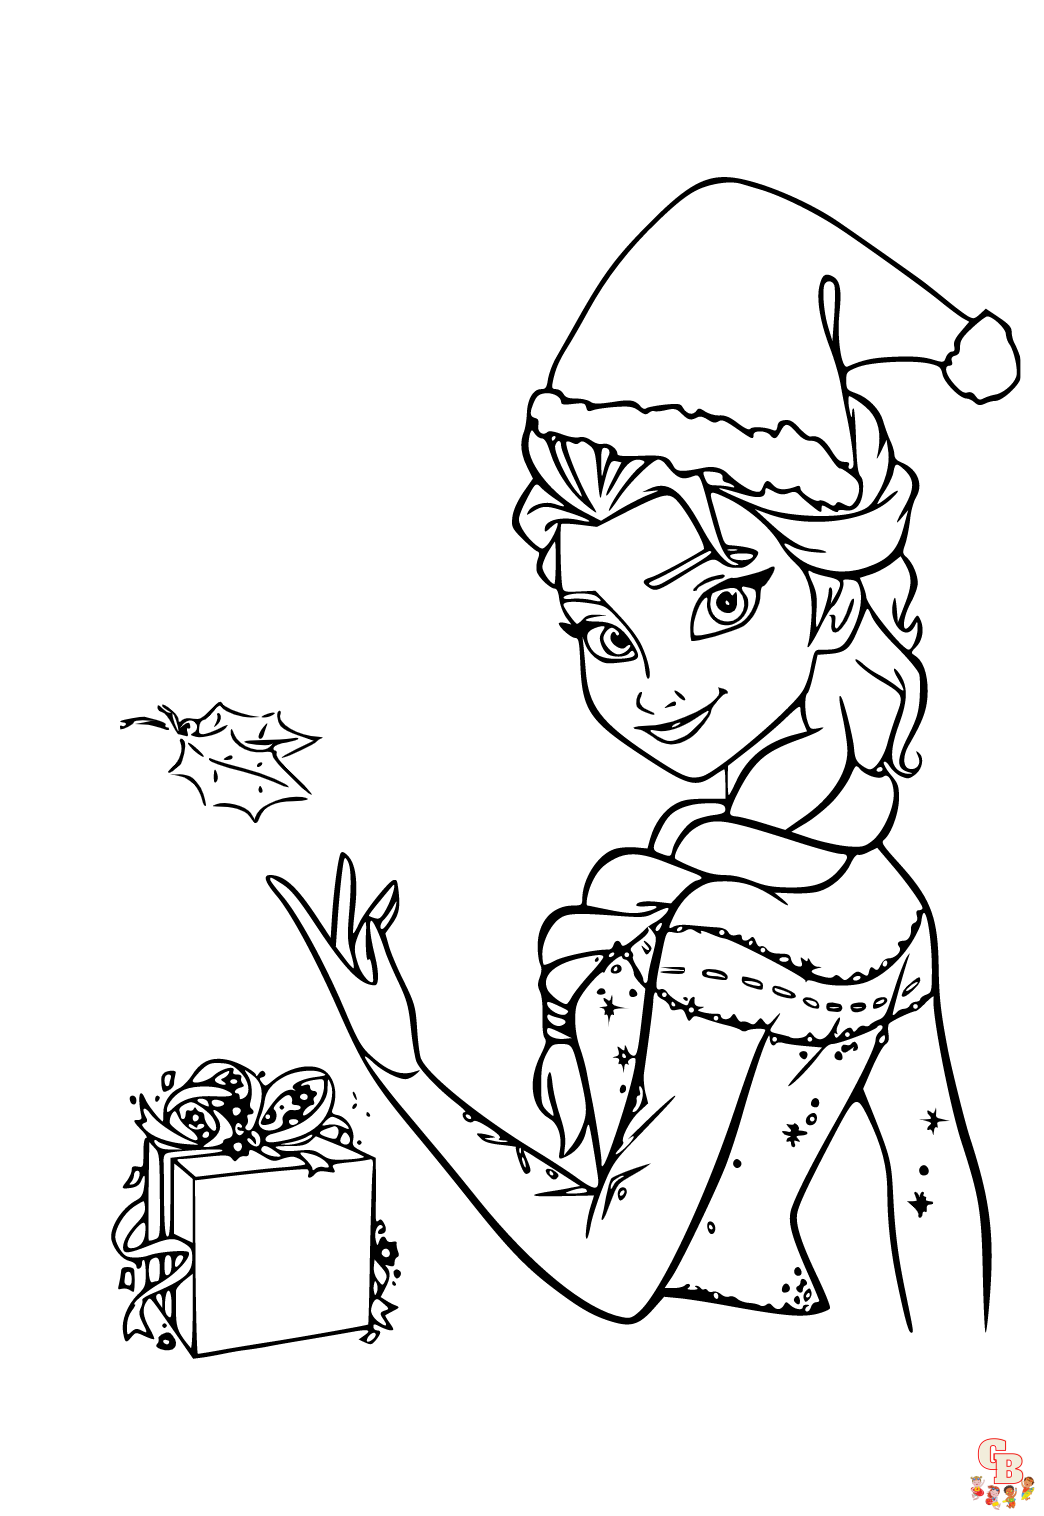 Disney Princess Coloring Pages Christmas.png